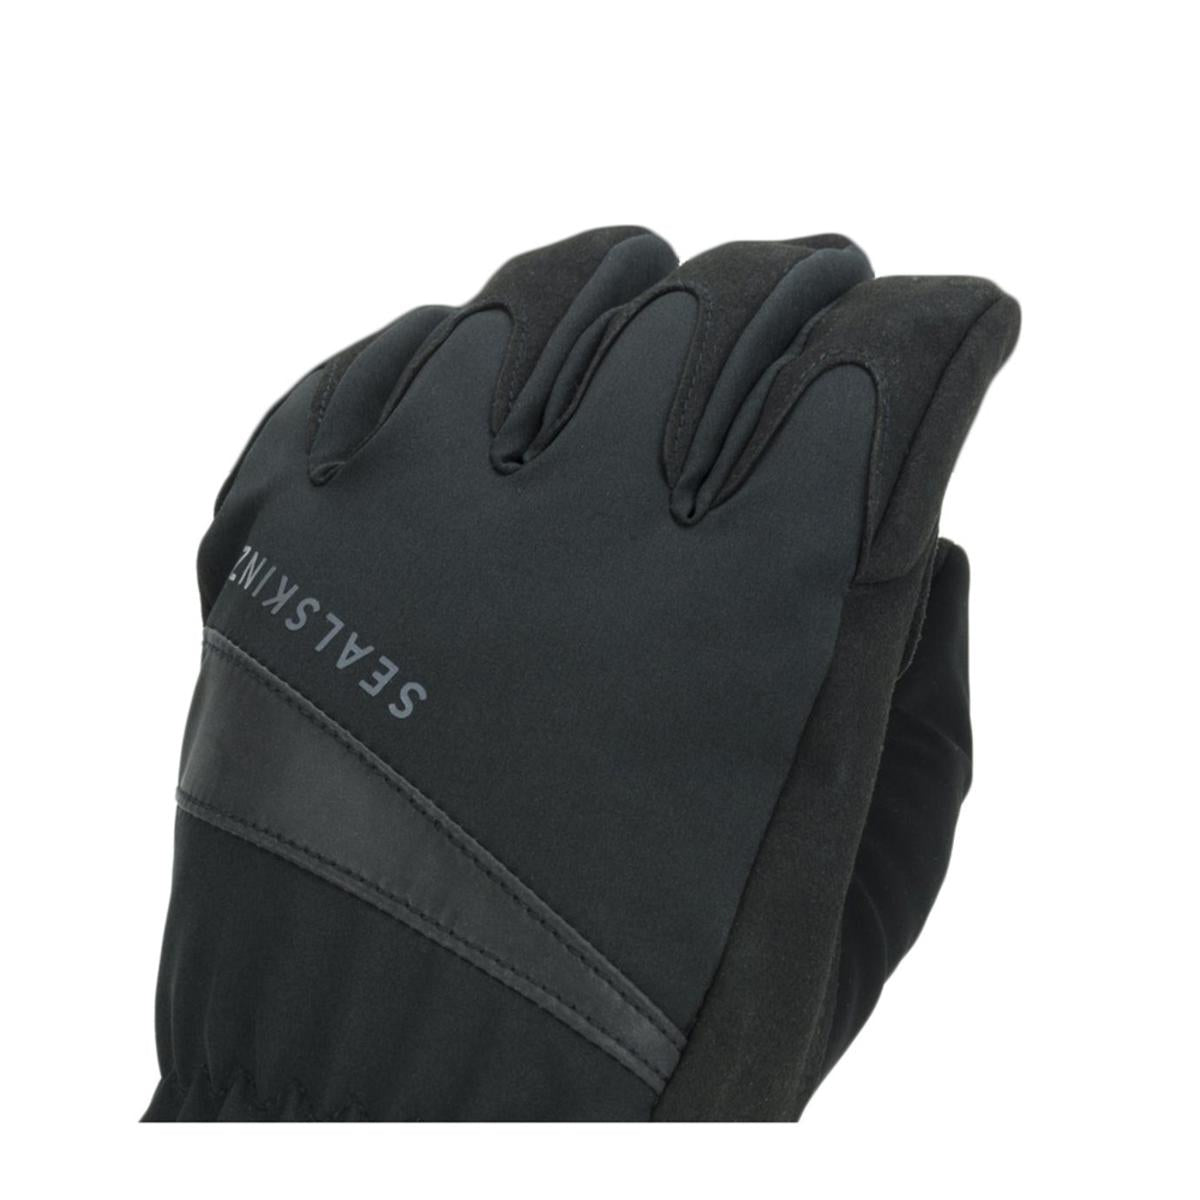 Sealskinz Men's Waterproof All Weather Cycle Gloves